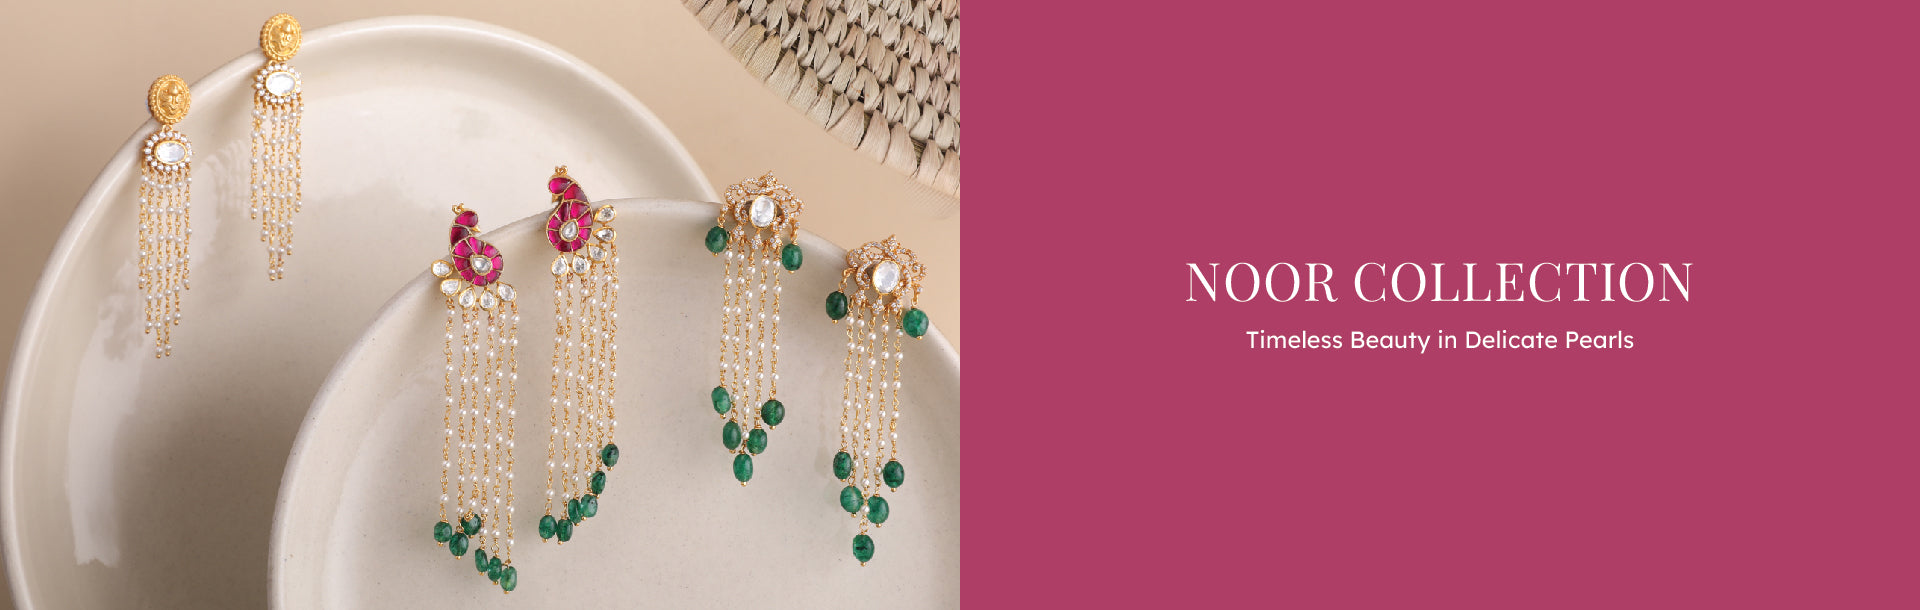 Noor Collection